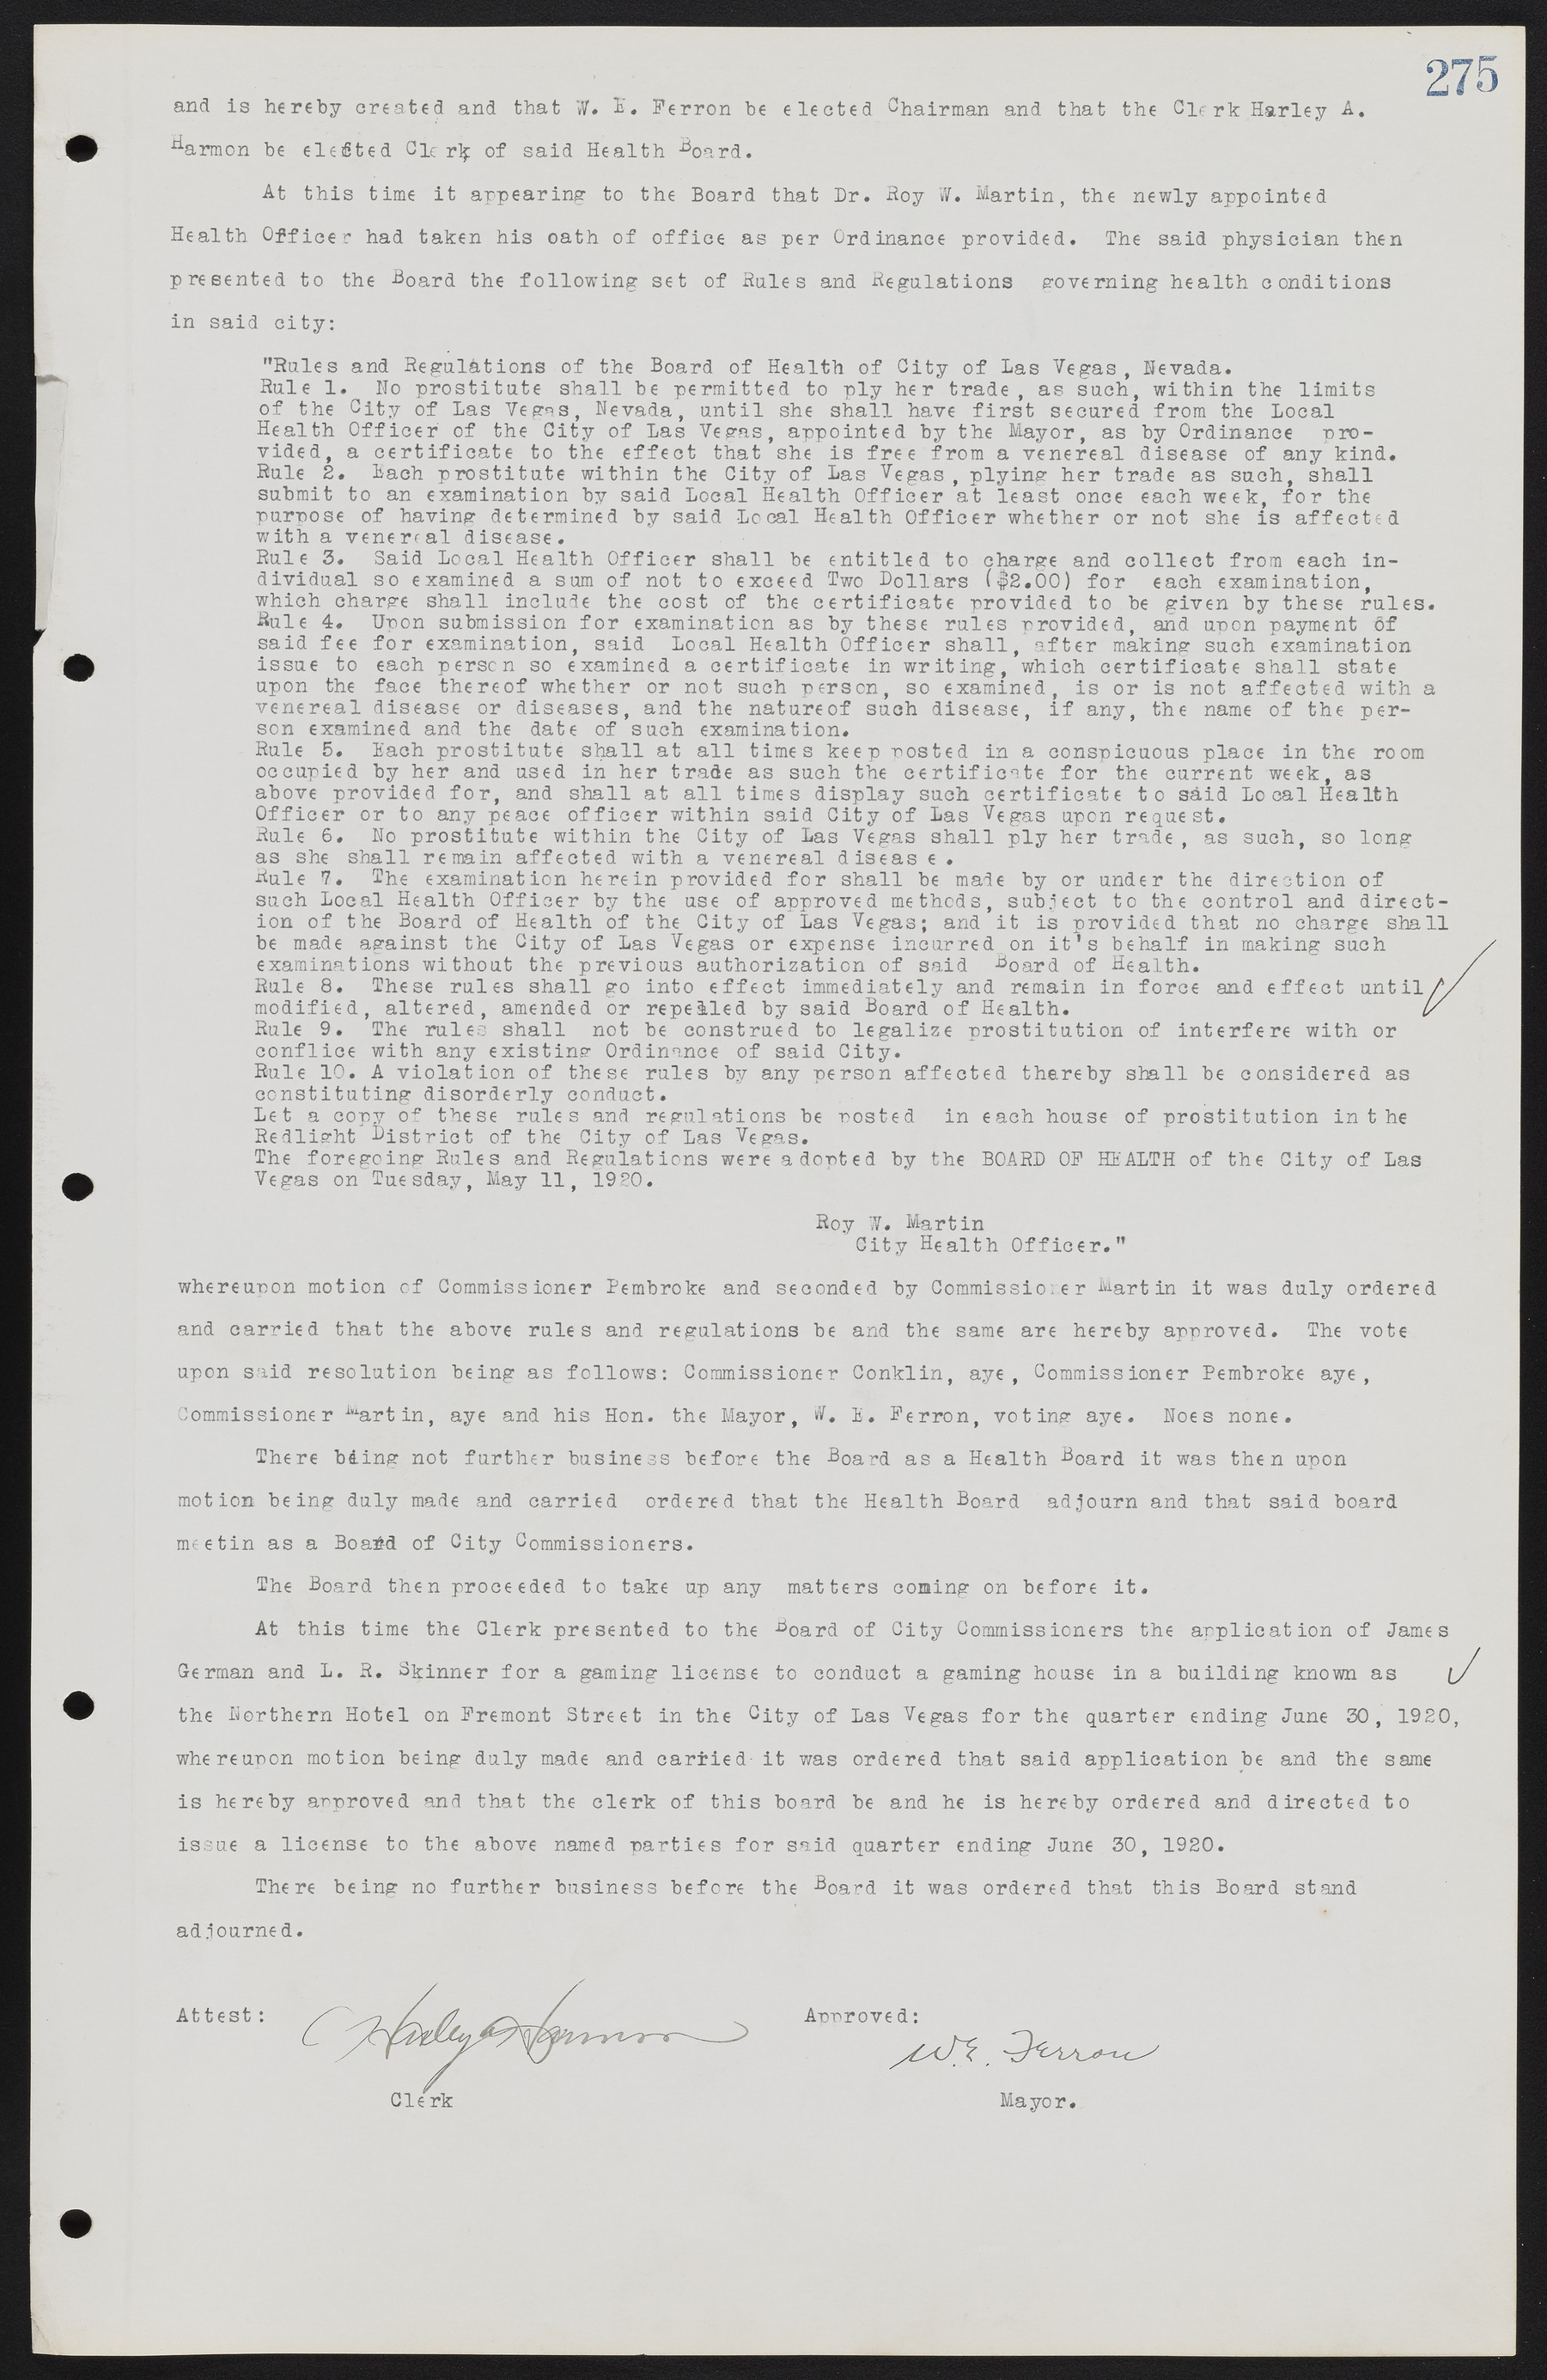 Las Vegas City Commission Minutes, June 22, 1911 to February 7, 1922, lvc000001-291